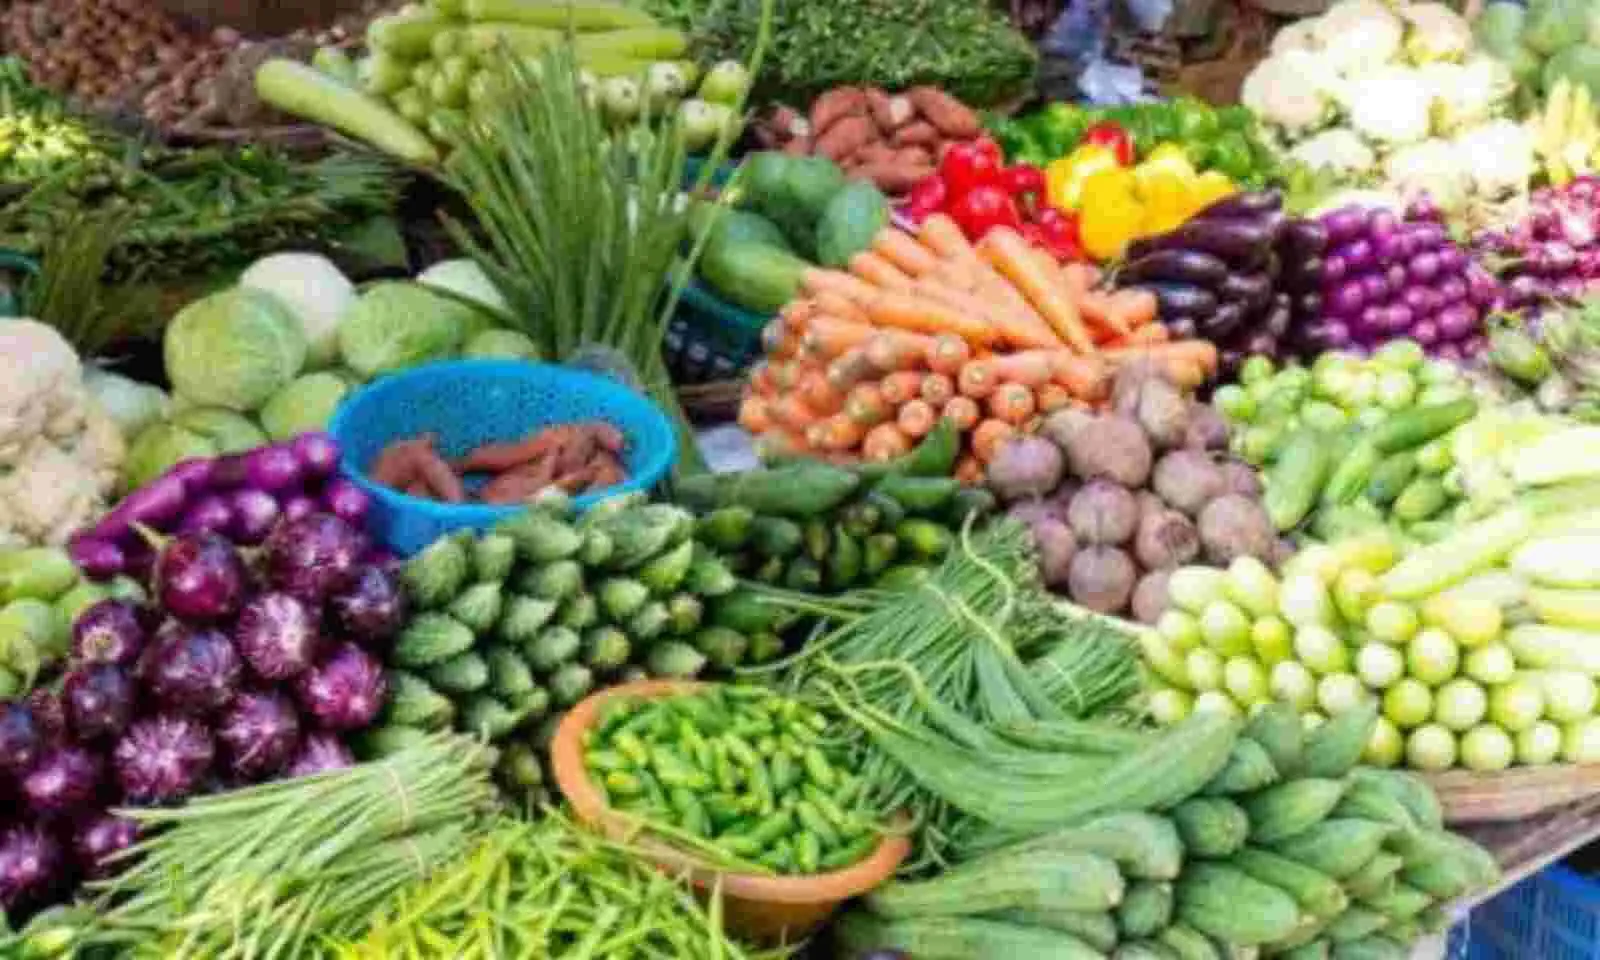 Kamrup (M) Admin Allowed 21 Guwahati Locations to Sell Fruits & Vegetables via Van - Sentinelassam